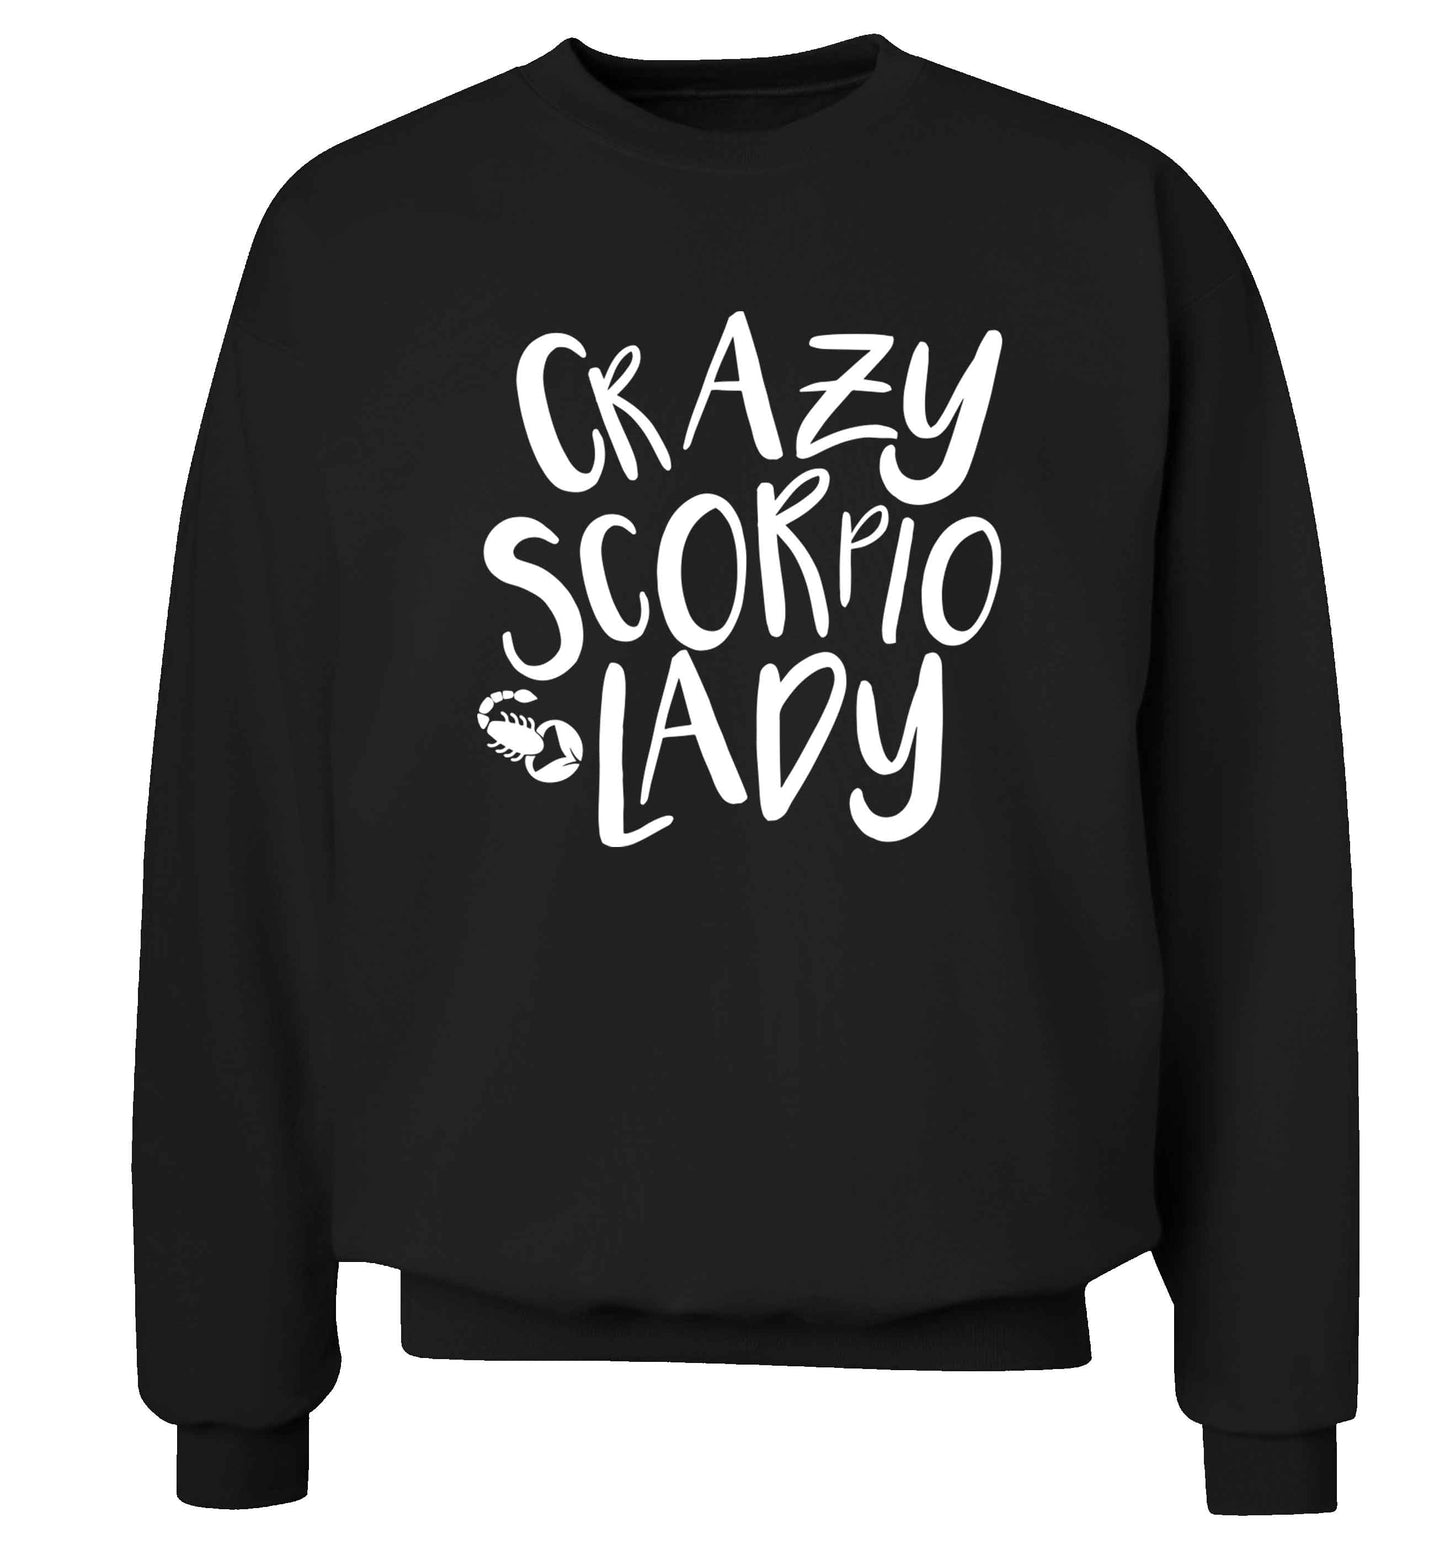 Crazy scorpio lady Adult's unisex black Sweater 2XL